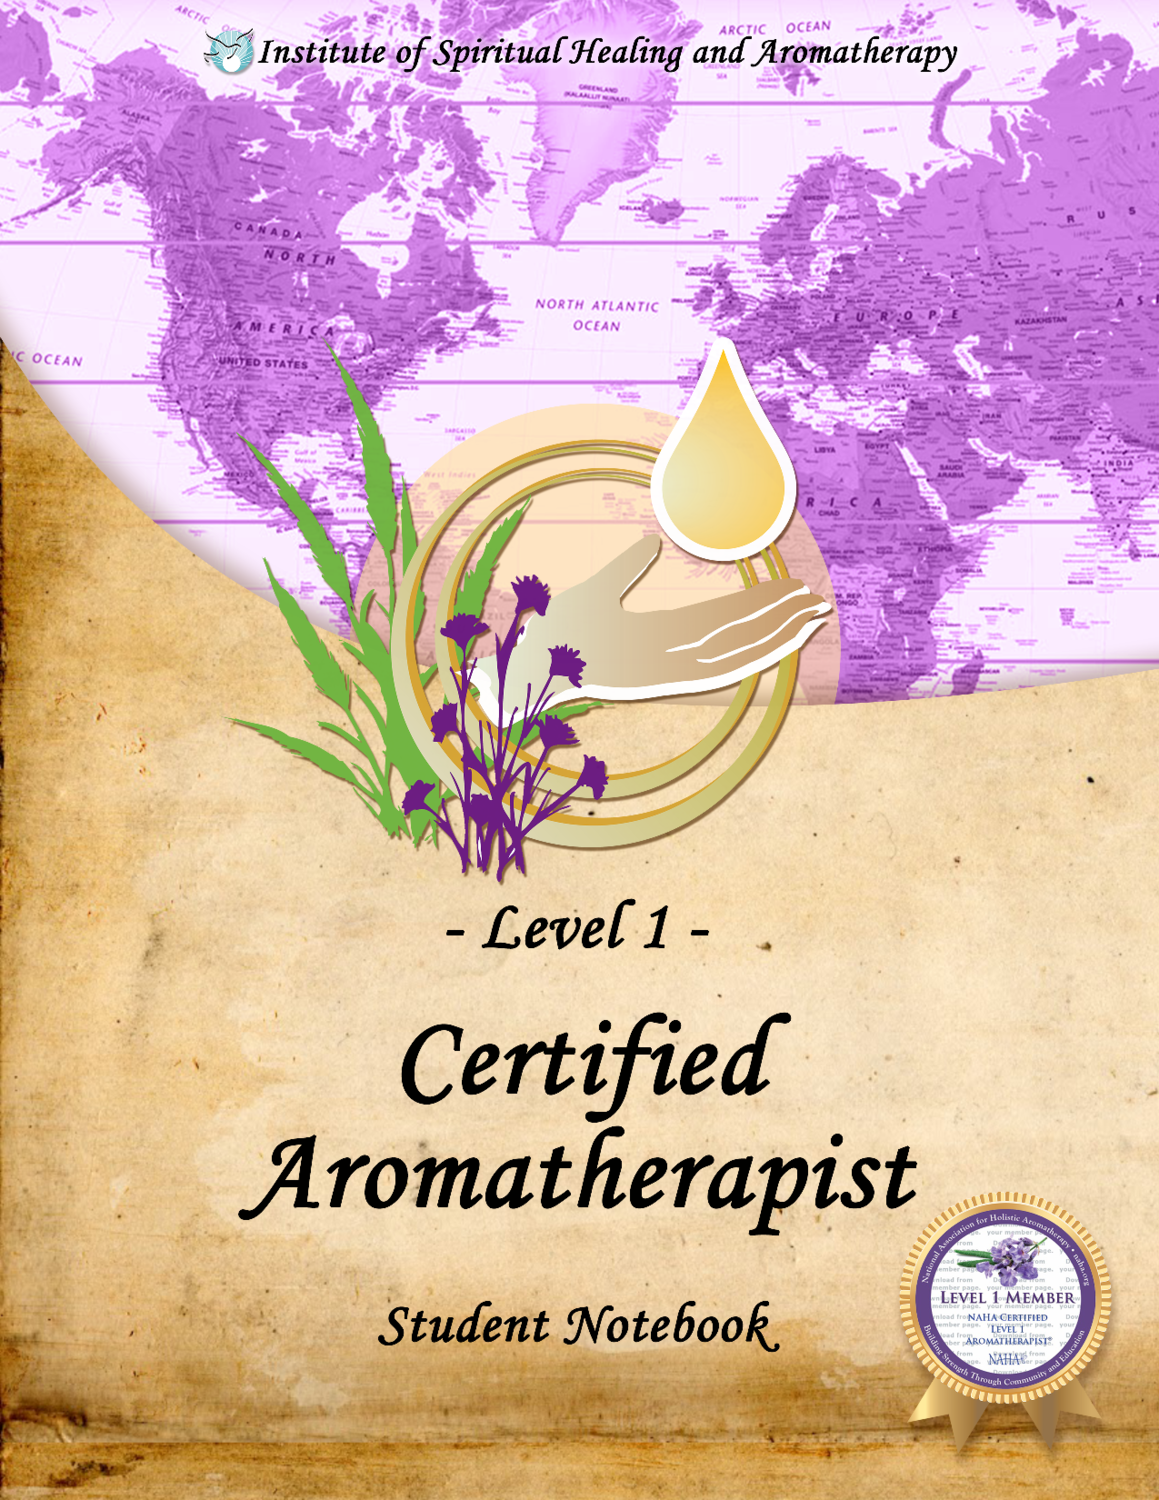 Certified Aromatherapist - Level 1 - Arvada, CO - August 10-12, 2018